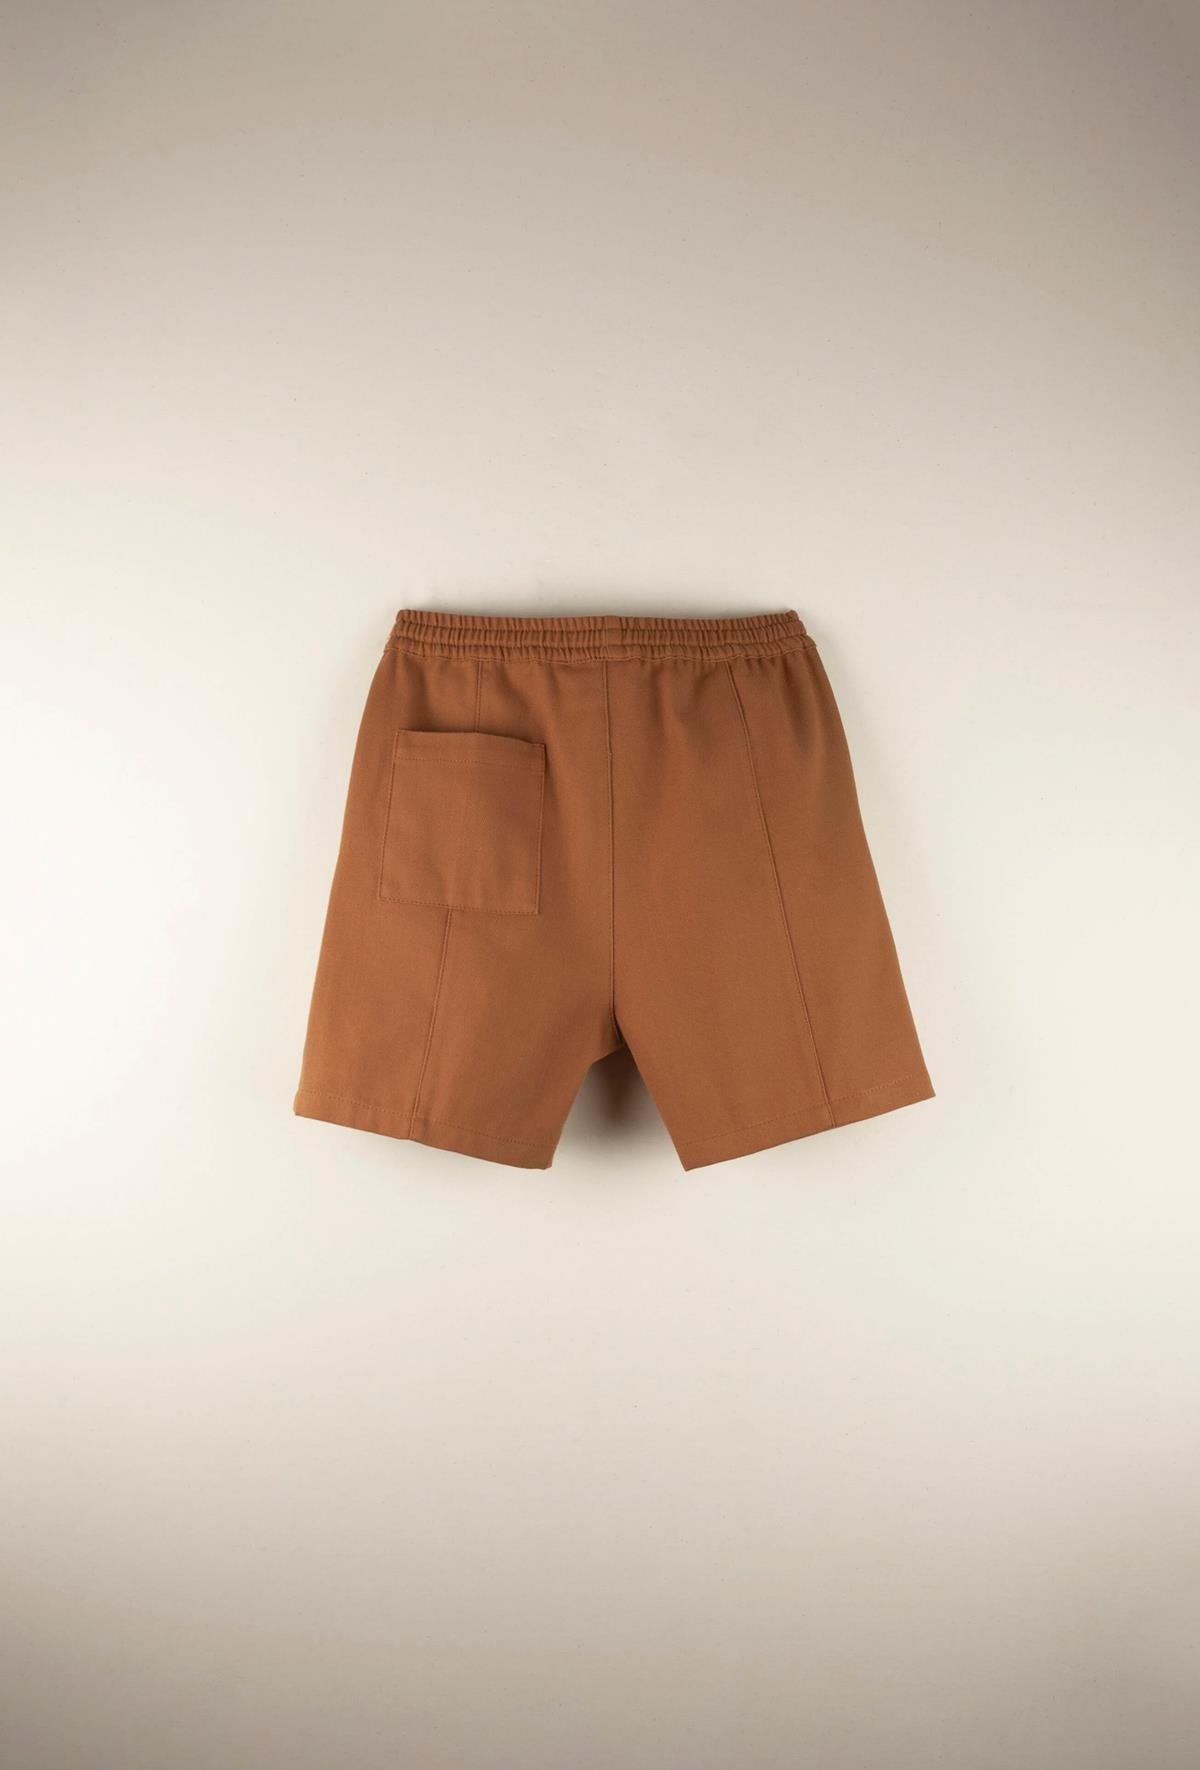 Mod.13.4 Terracotta Bermuda shorts | SS22 Mod.13.4 Terracotta Bermuda shorts | 1